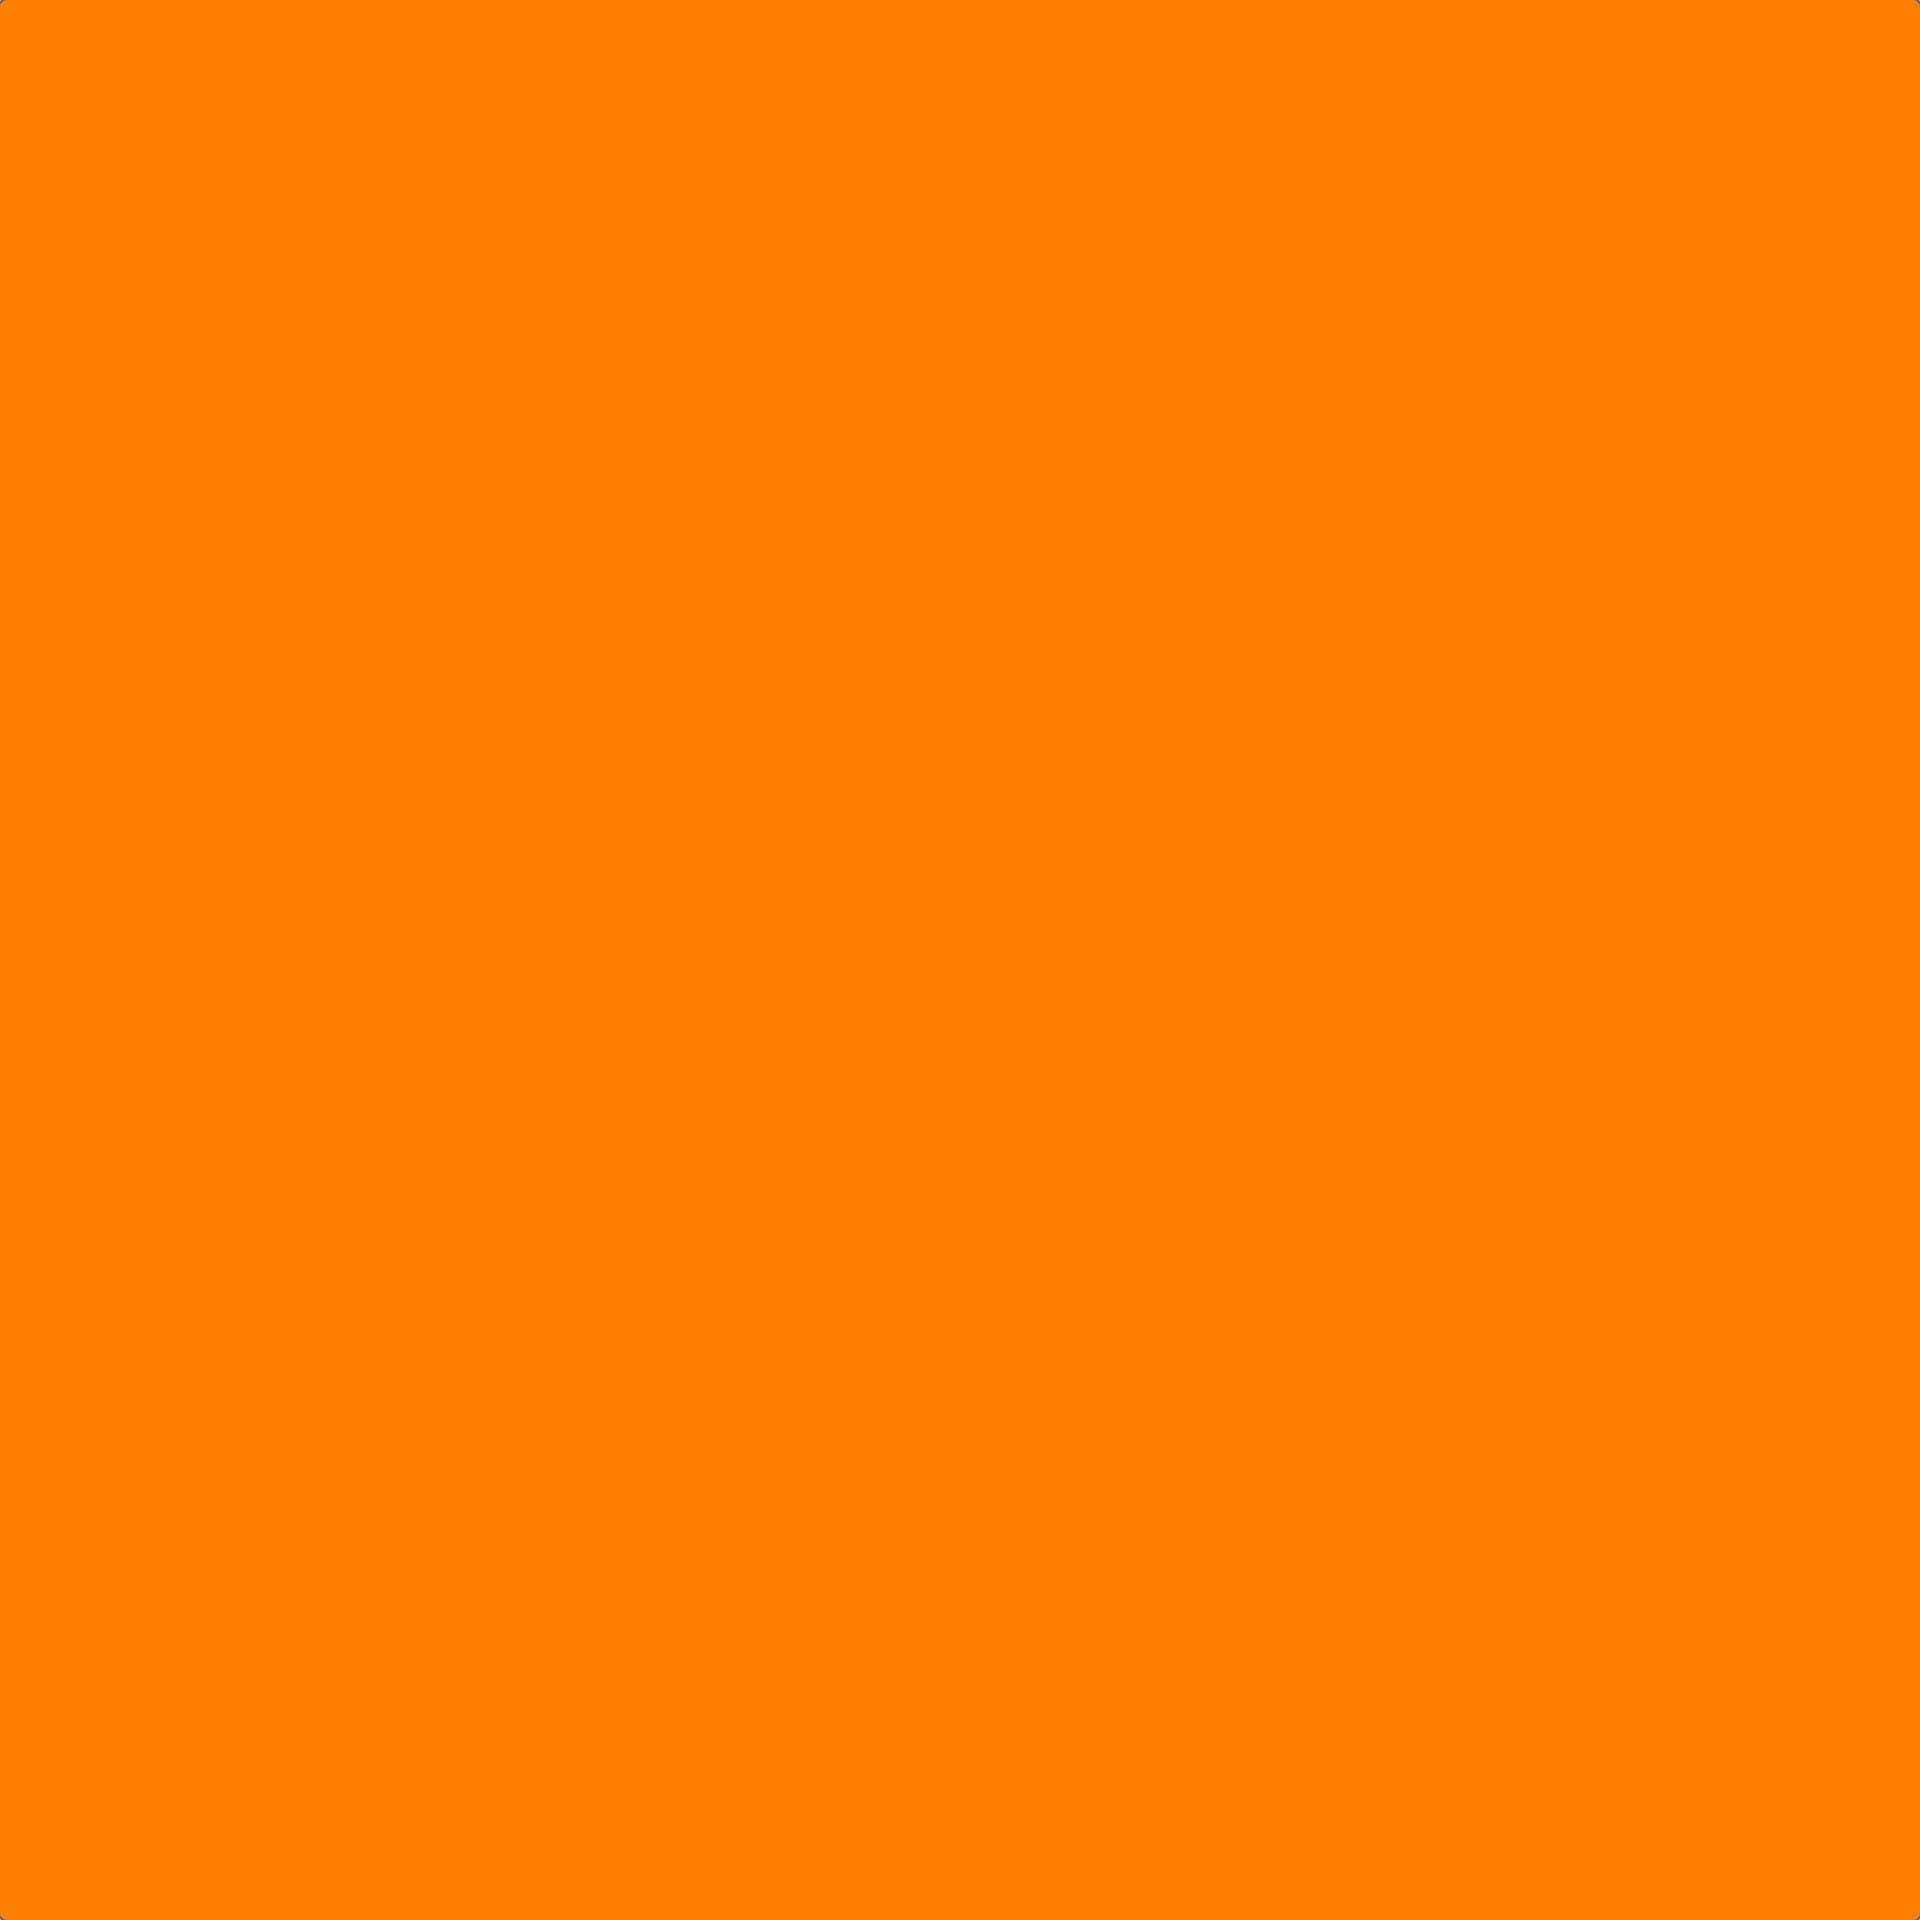 A Square Orange Color With A White Background Wallpaper